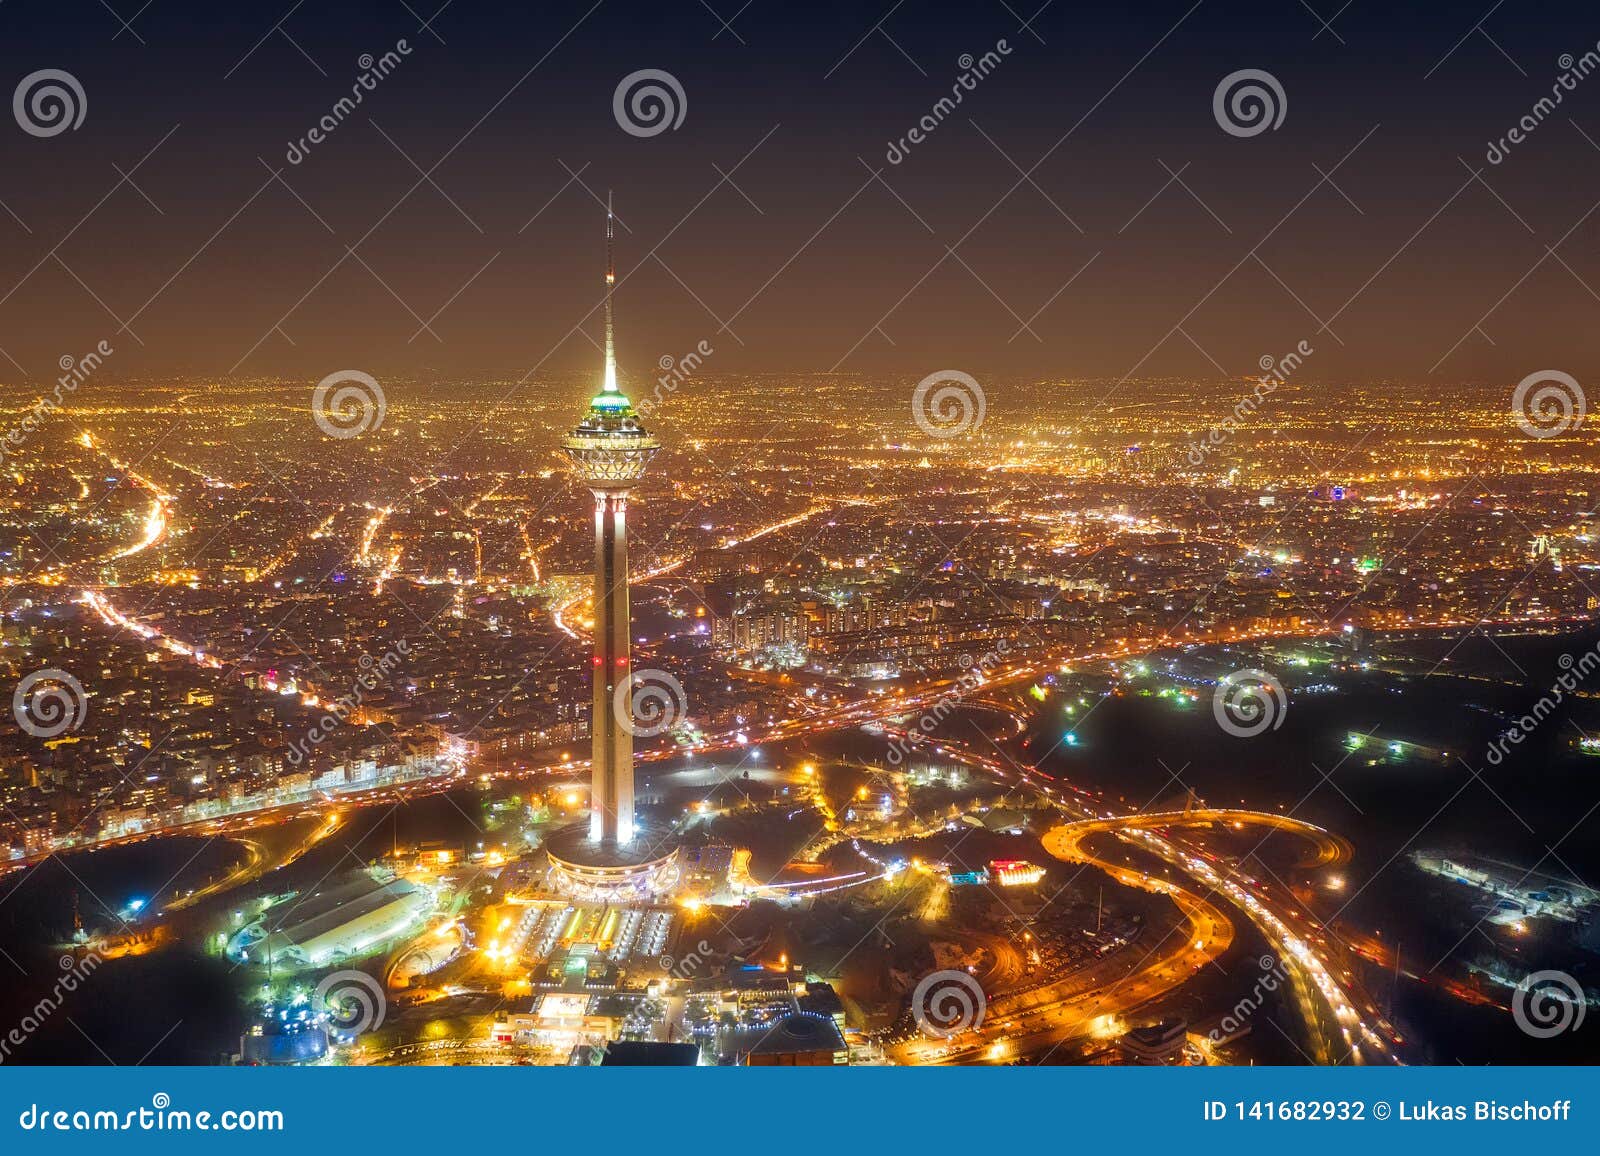 Milad Tower At Night In Tehran Iran Taken In January 2019 Taken In Hdr Editorial Photography